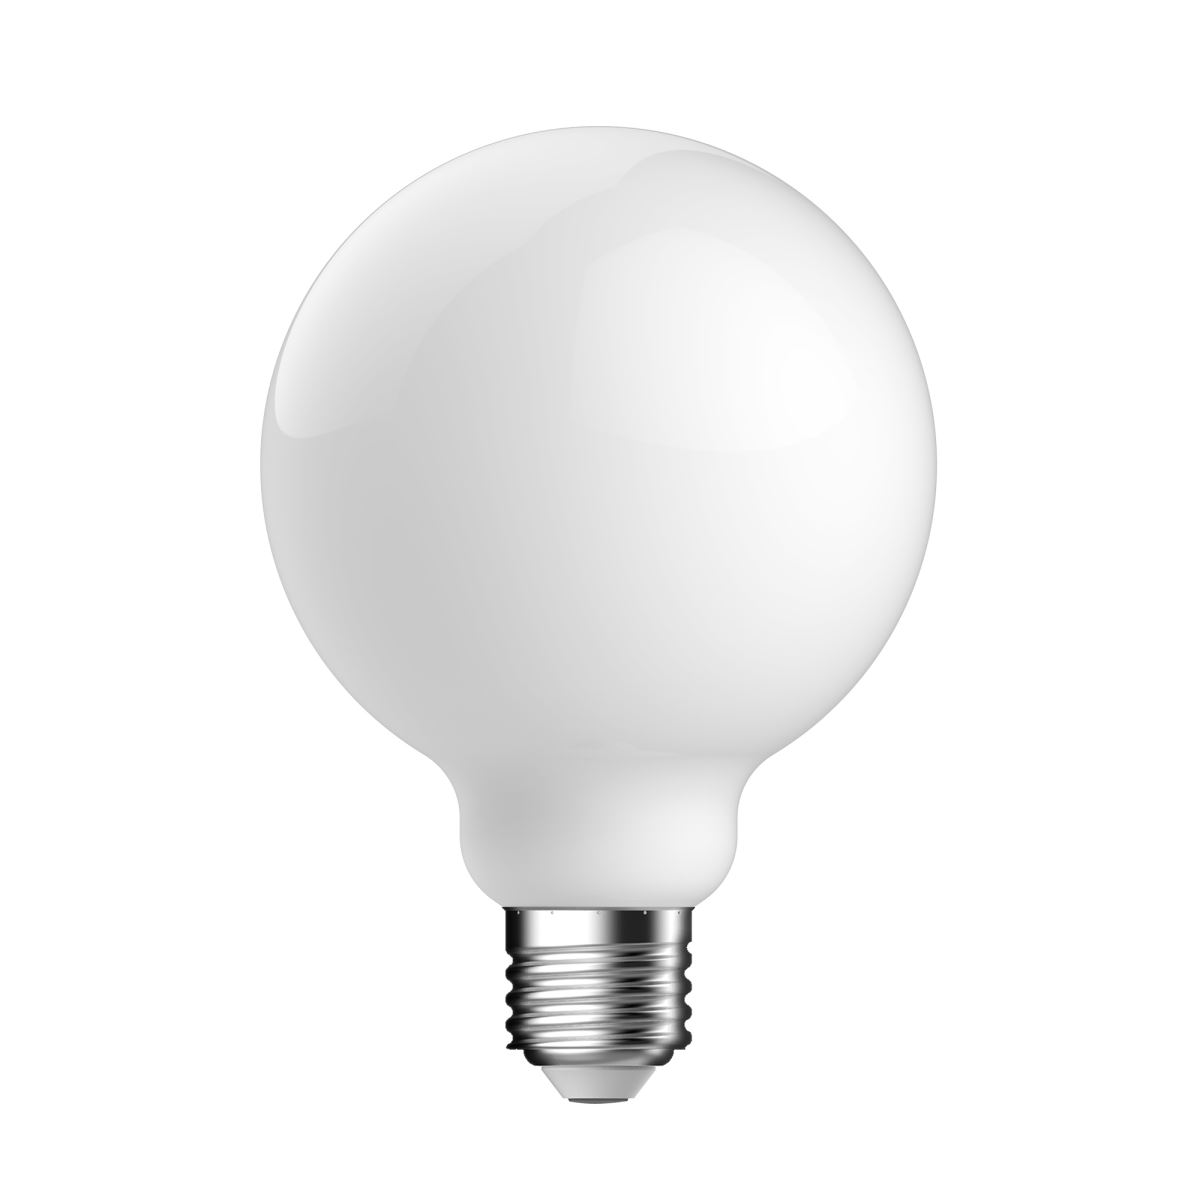 Nordlux Energetic LED Leuchtmittel E27 G95 Filament weiß 1055lm 2700K 8,6W 80Ra 360° dimmbar 9,5x9,5x13,7cm von Energetic